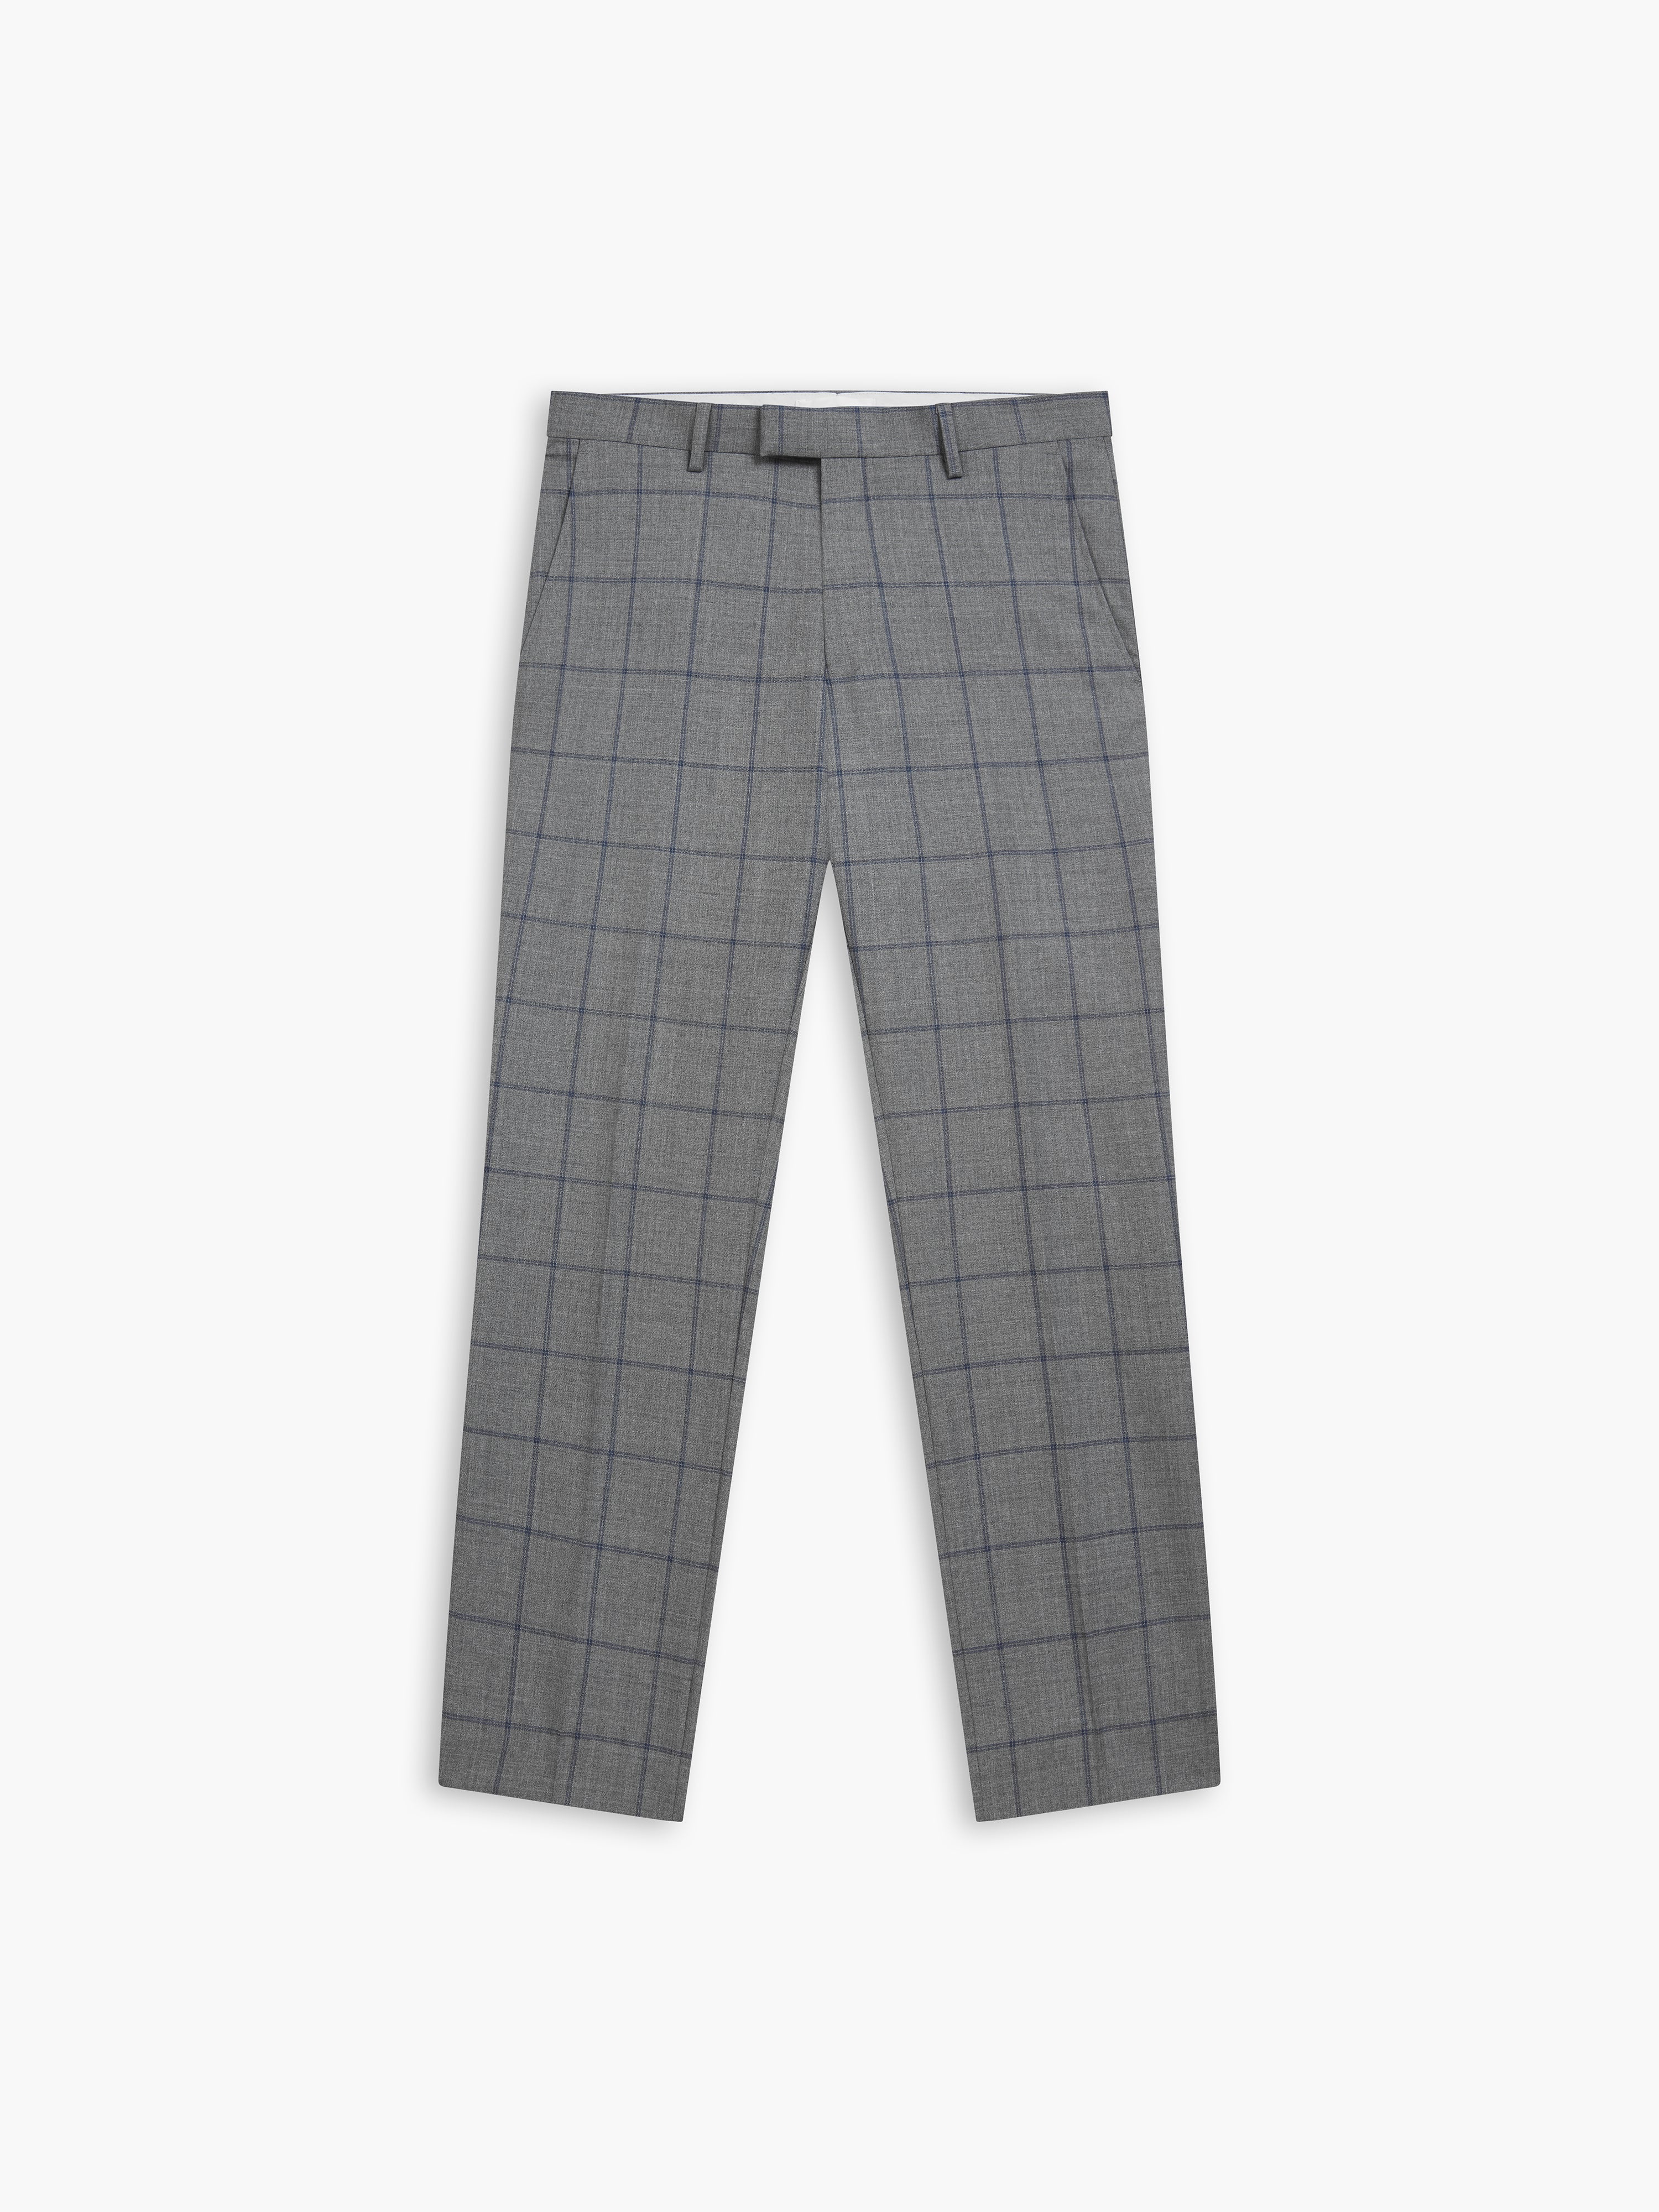 Asos Super Skinny Suit Pants In Green Window Pane Check, $61 | Asos |  Lookastic